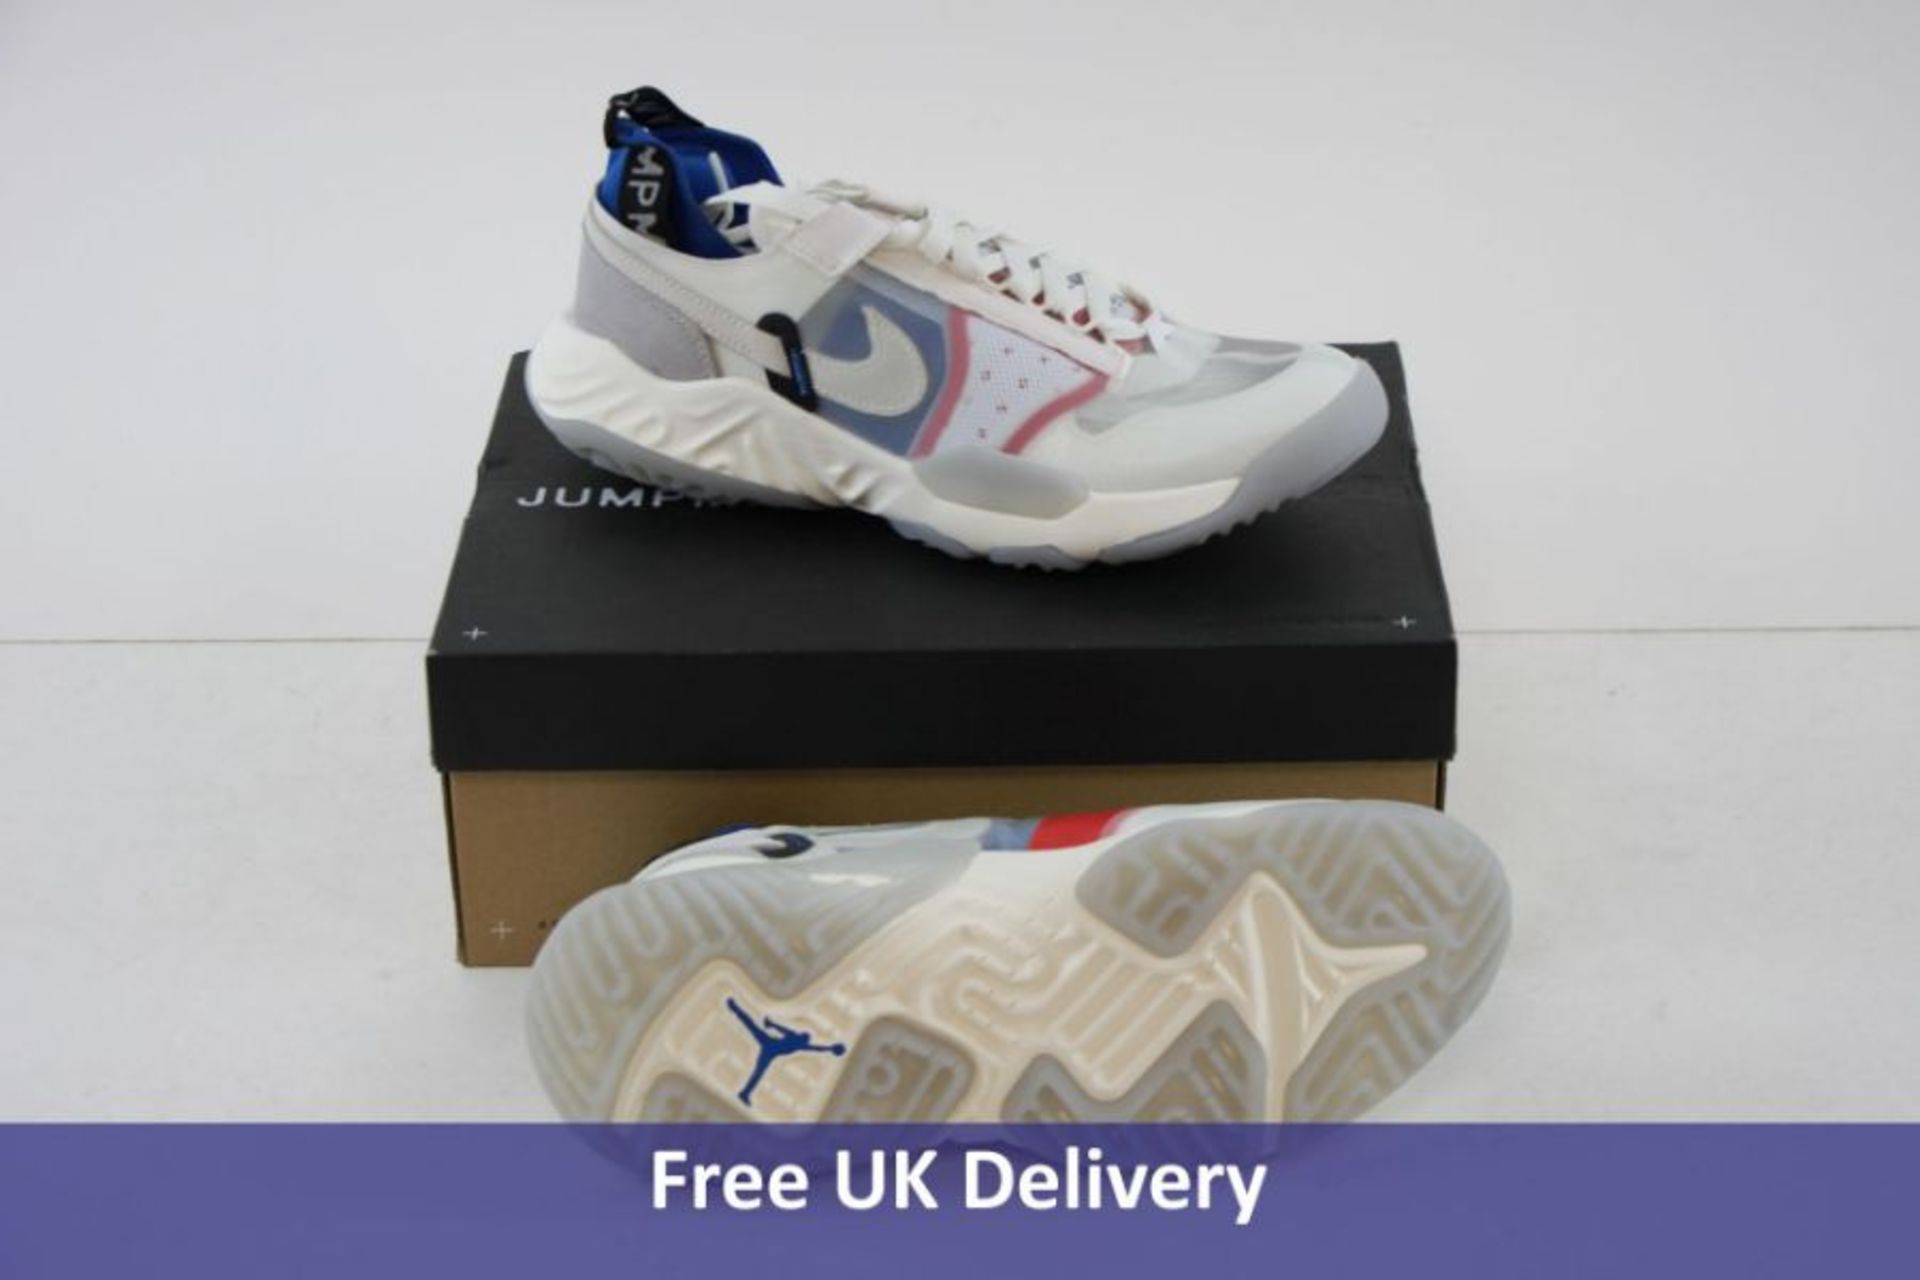 Nike Air Unisex Jordan Delta Breathe Trainers, Sail White and Tech Grey, UK 6.5